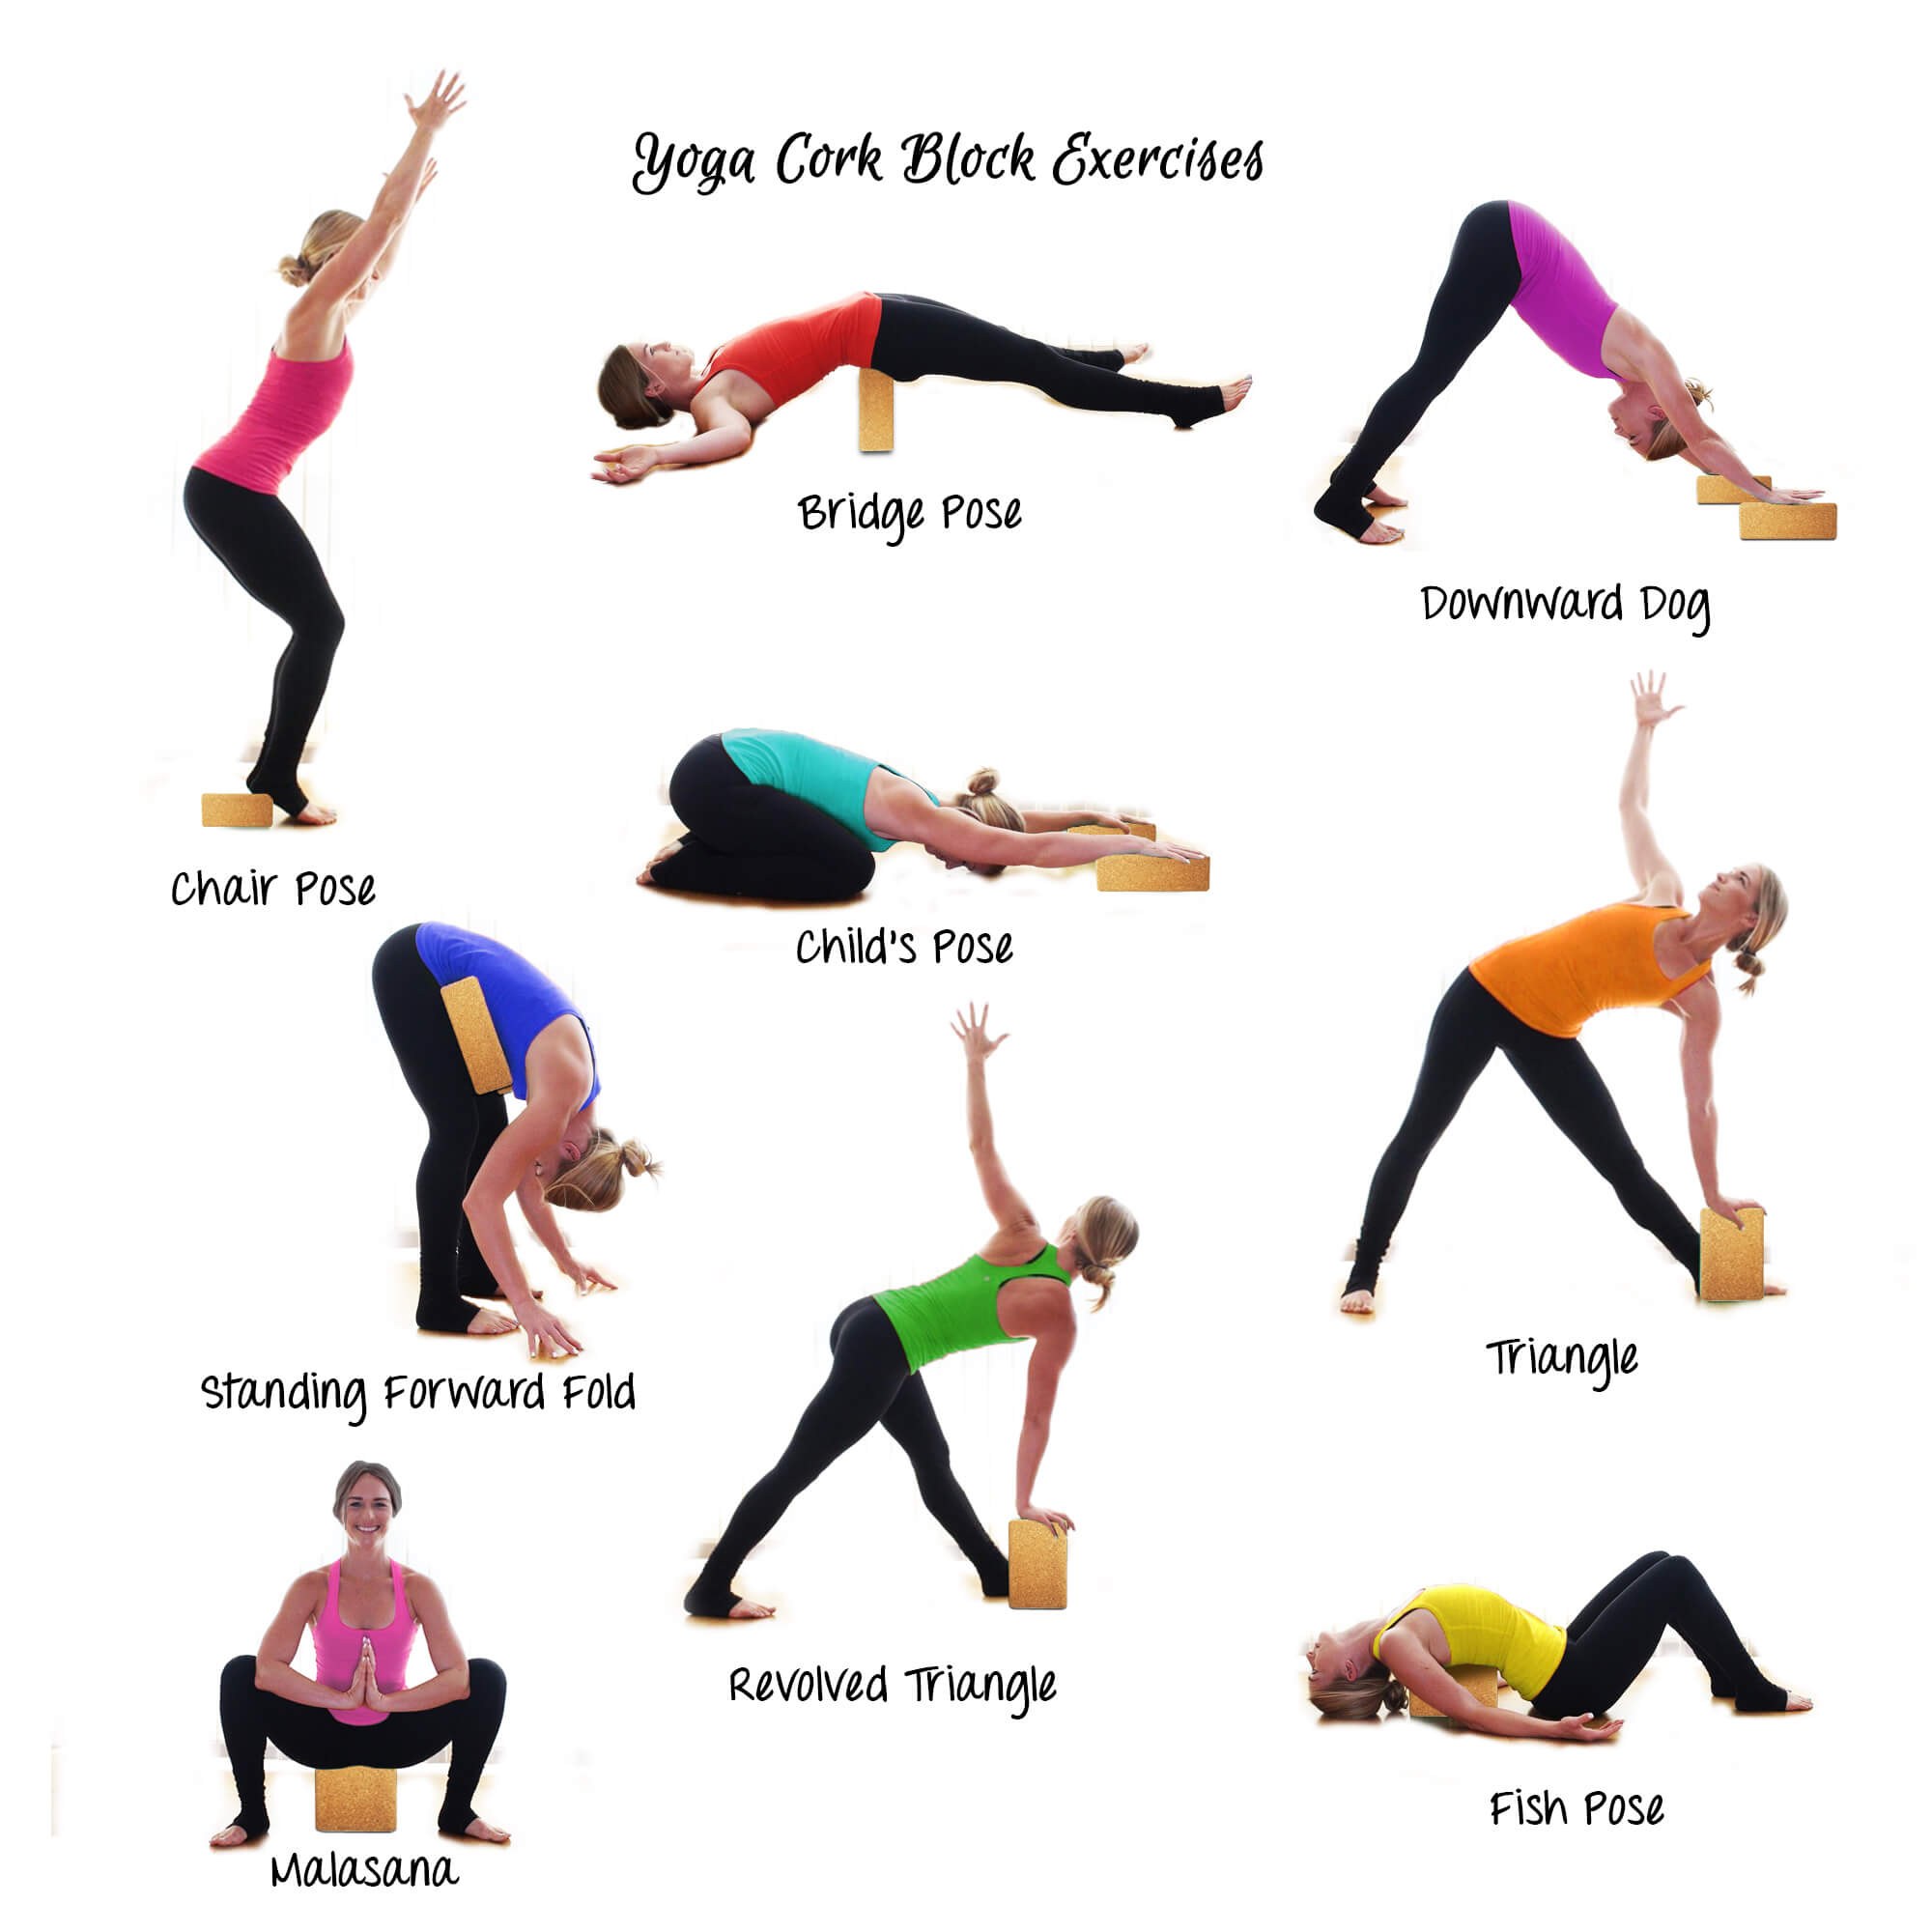 Cork Yoga Block - Stretch Now